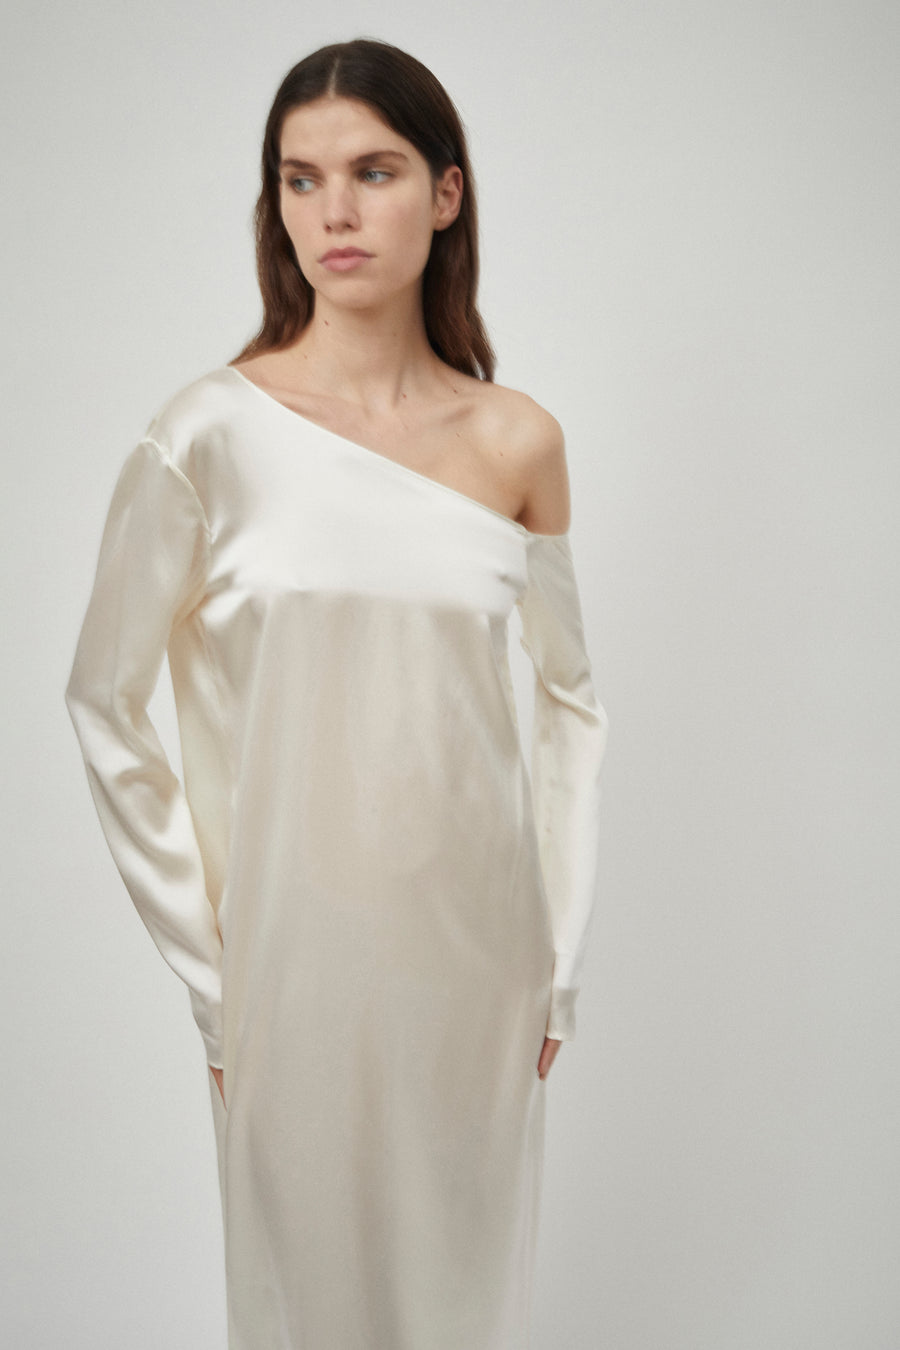 Silk Satin Asymmetric Dress